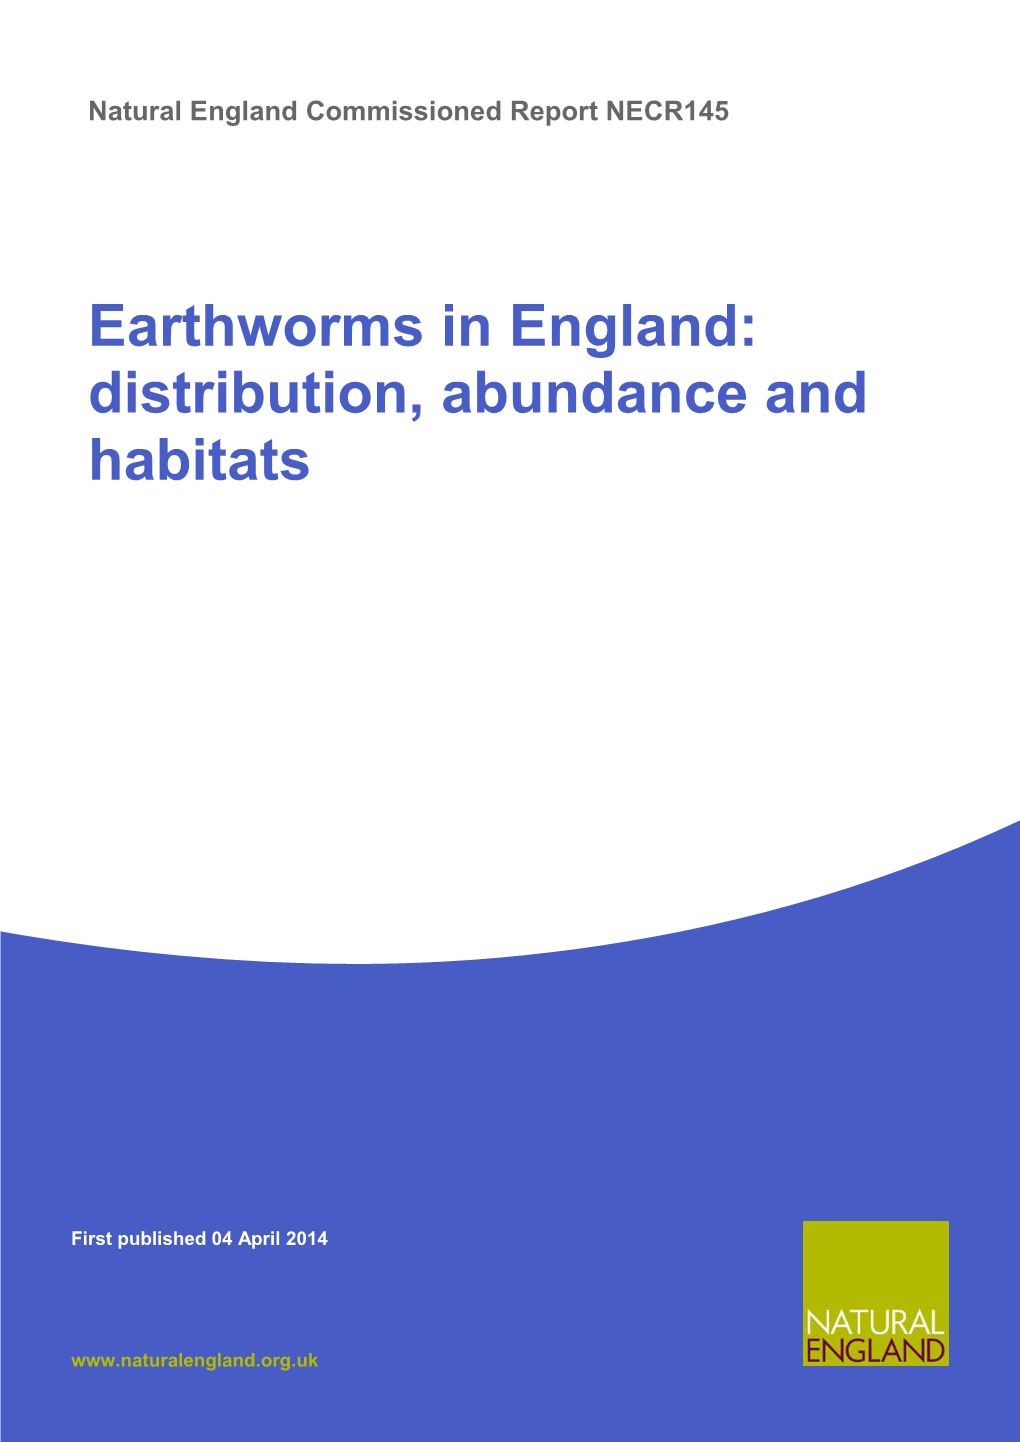 Earthworms in England: Distribution, Abundance and Habitats